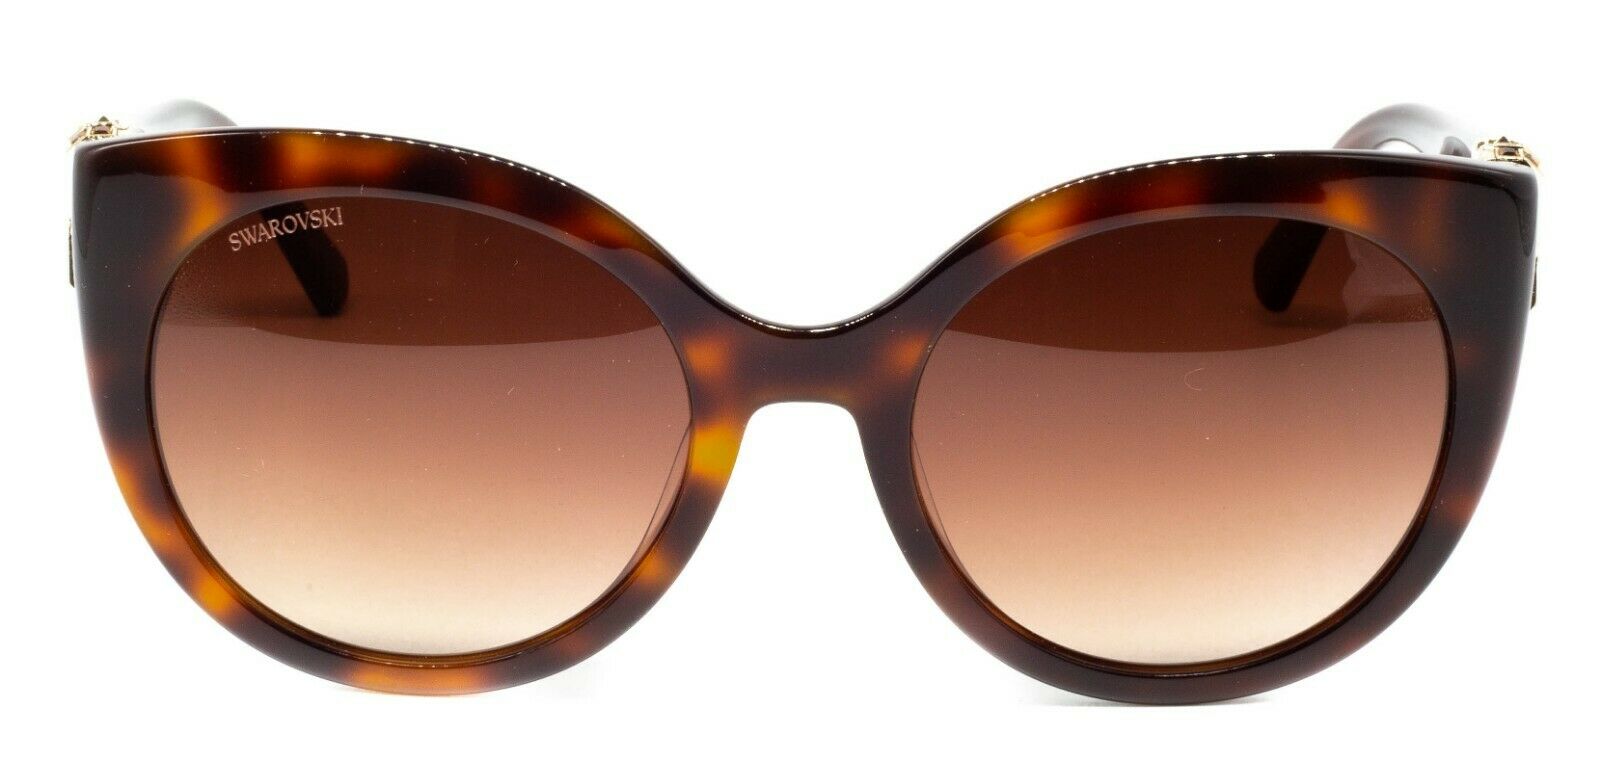 SWAROVSKI SK 156 52F *3 56mm Sunglasses Shades Frames Eyewear Glasses BNIB New